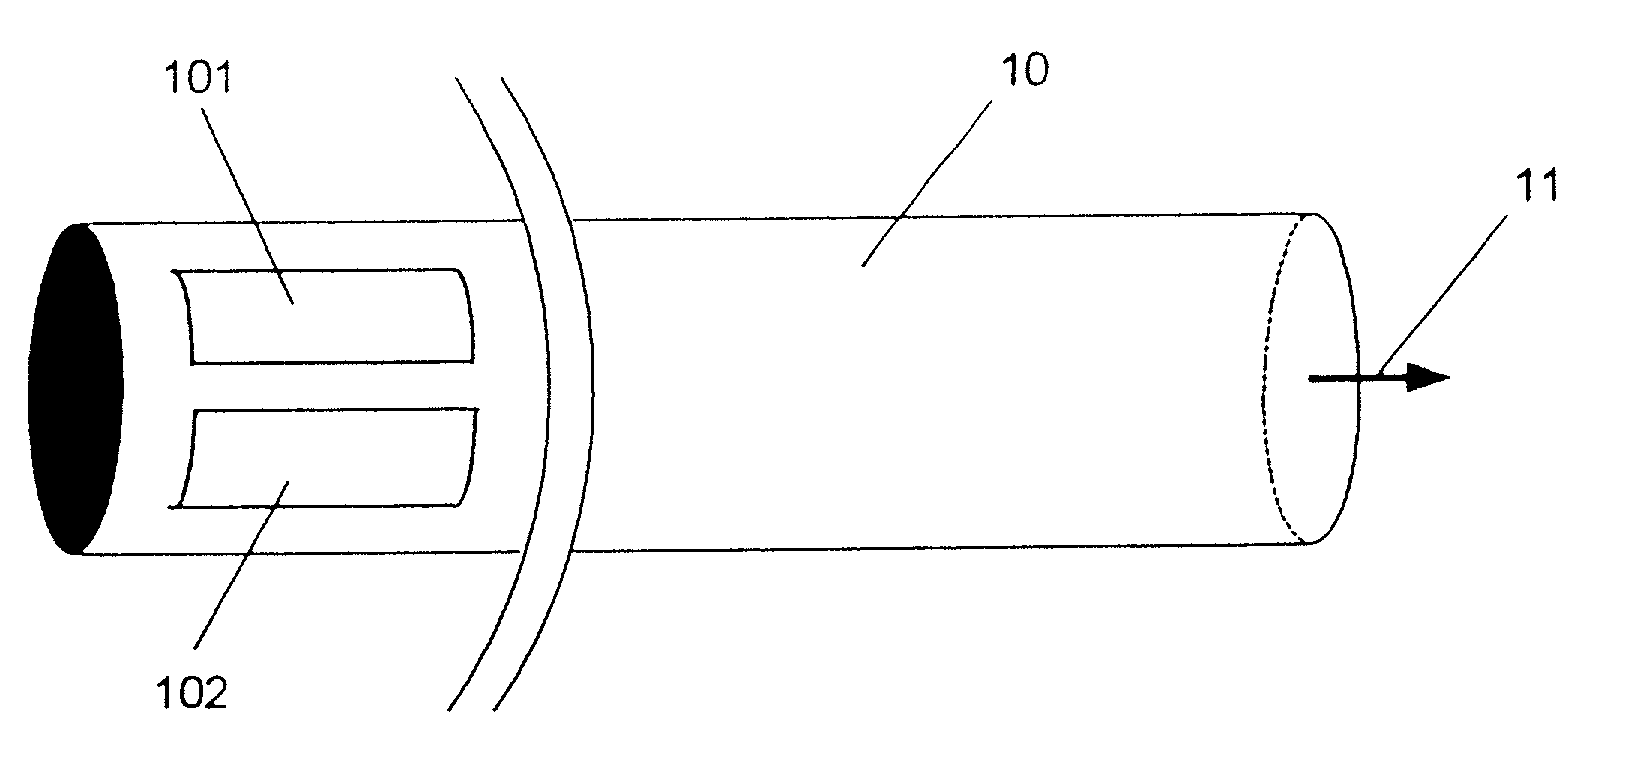 Electronic marking of a medication cartridge